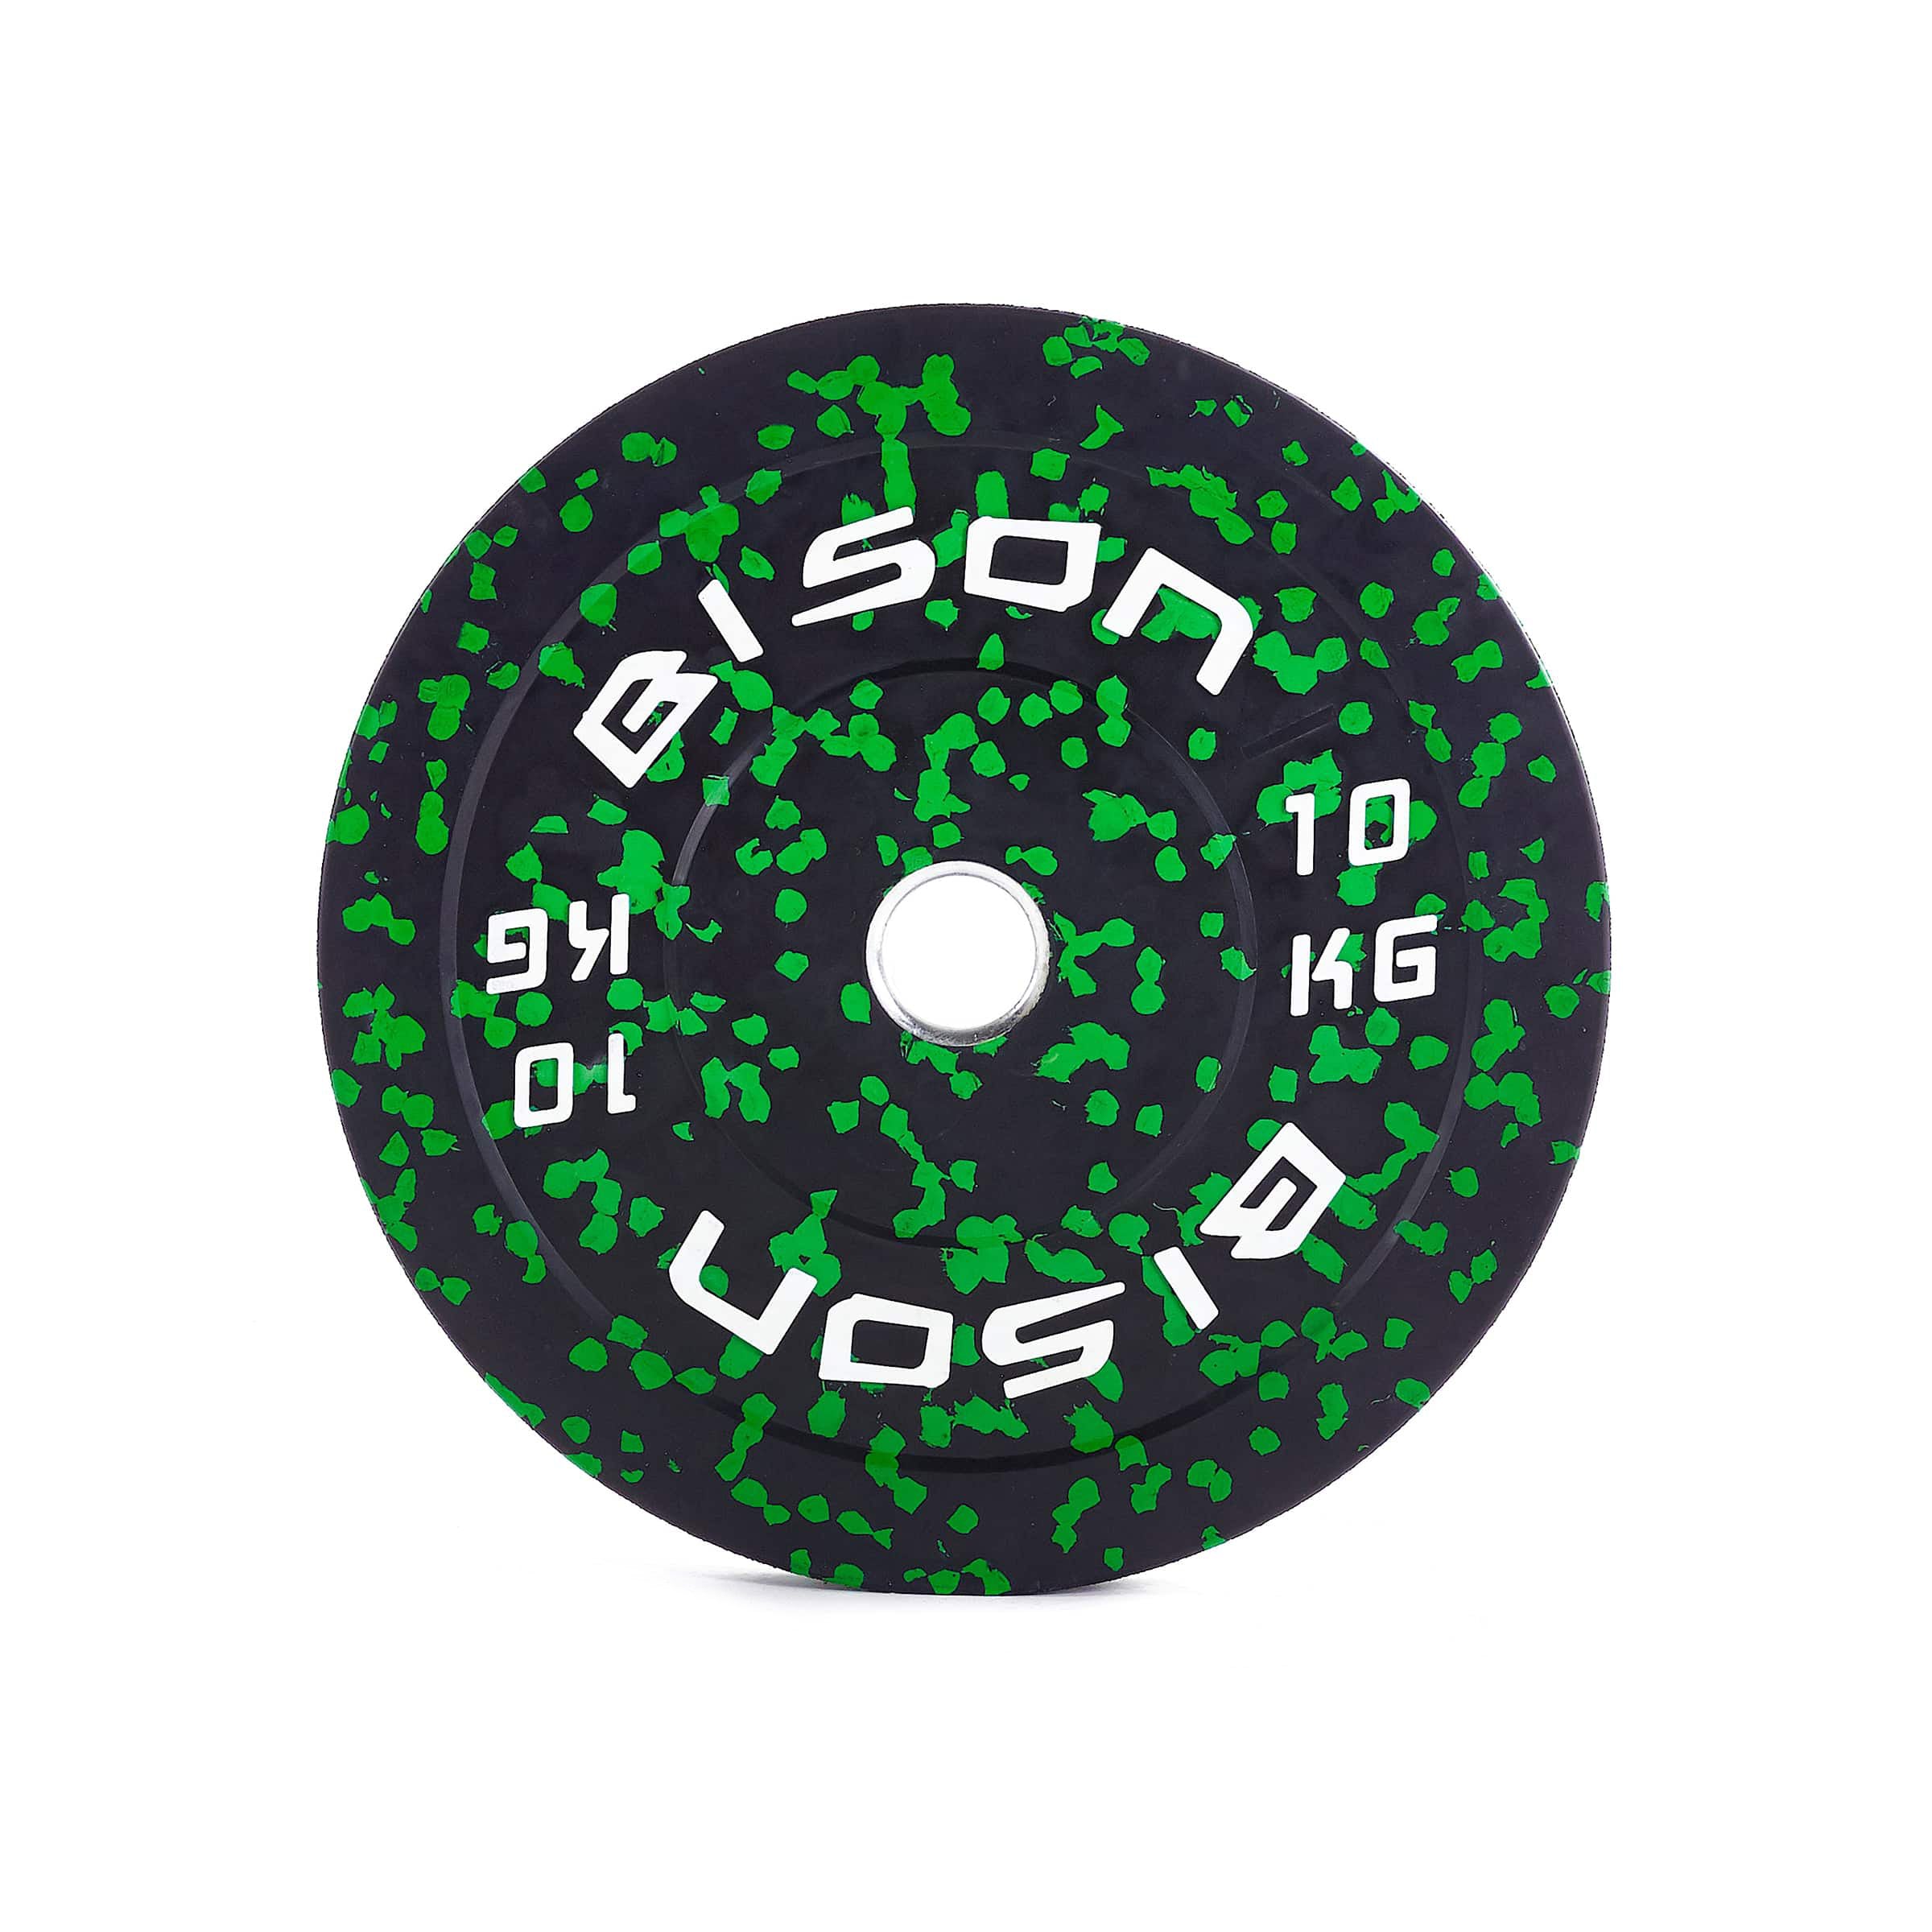 Bison Hi-Impact Bumper Plates - Wolverson Fitness